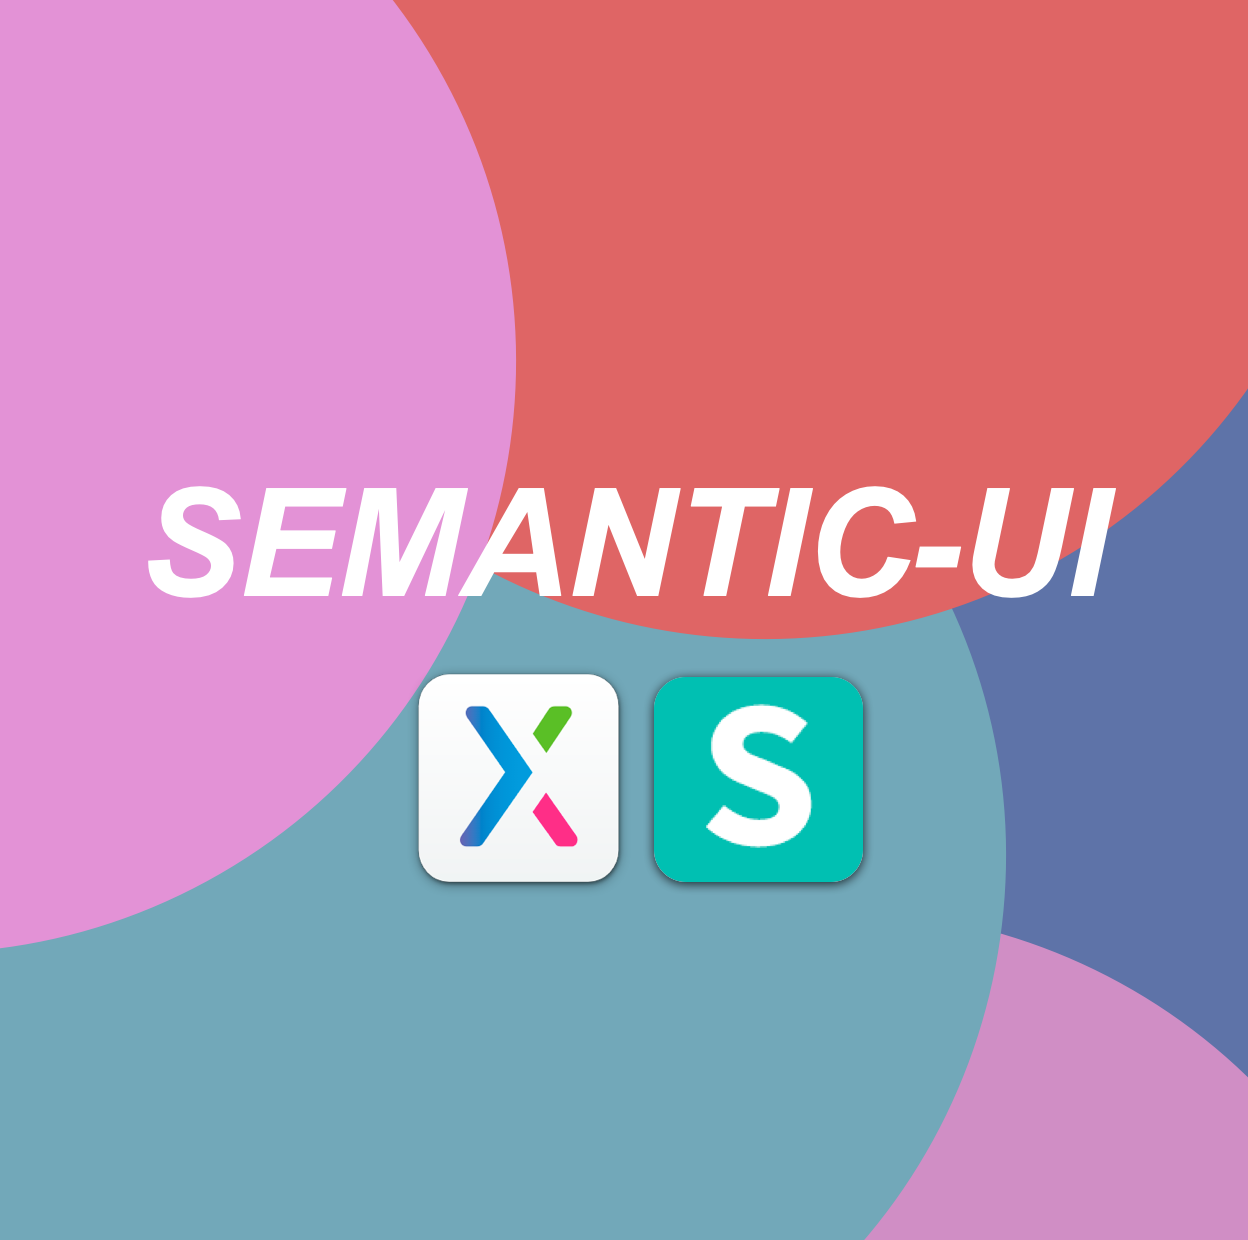 Semantic-UI Widgets Library